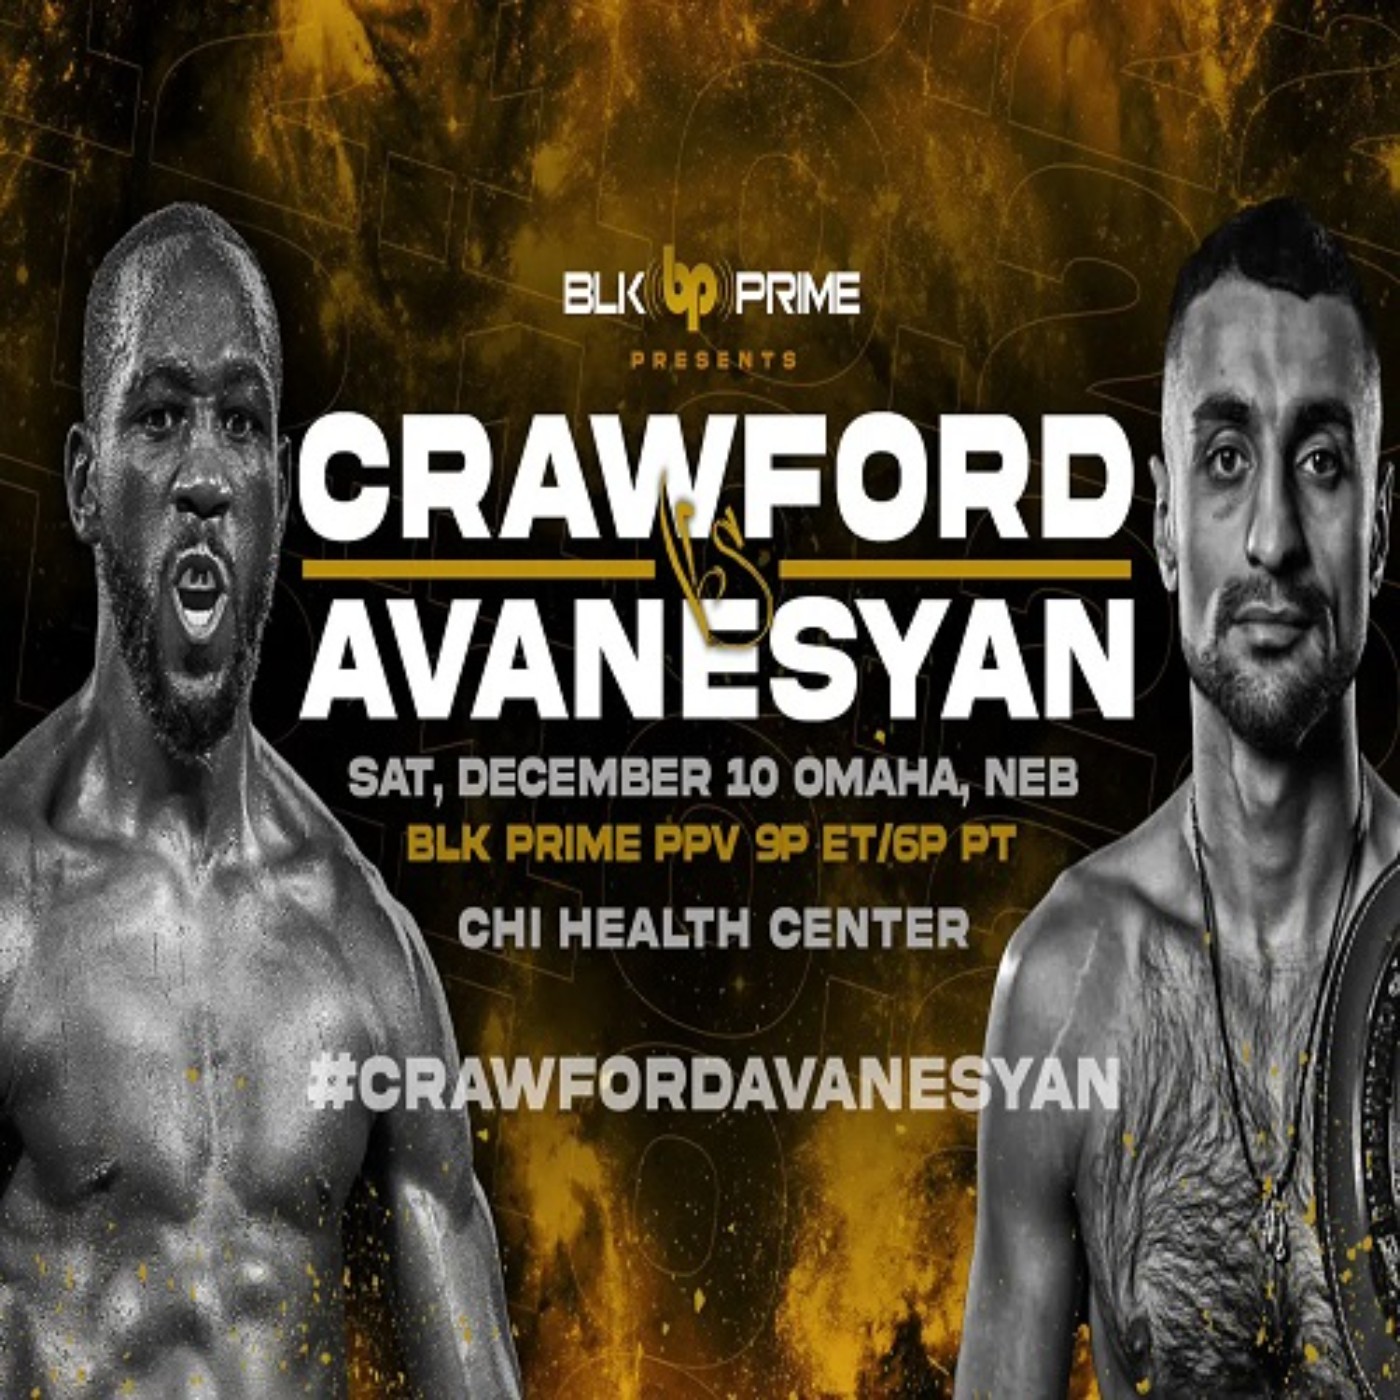 crawford vs avanesyan live stream